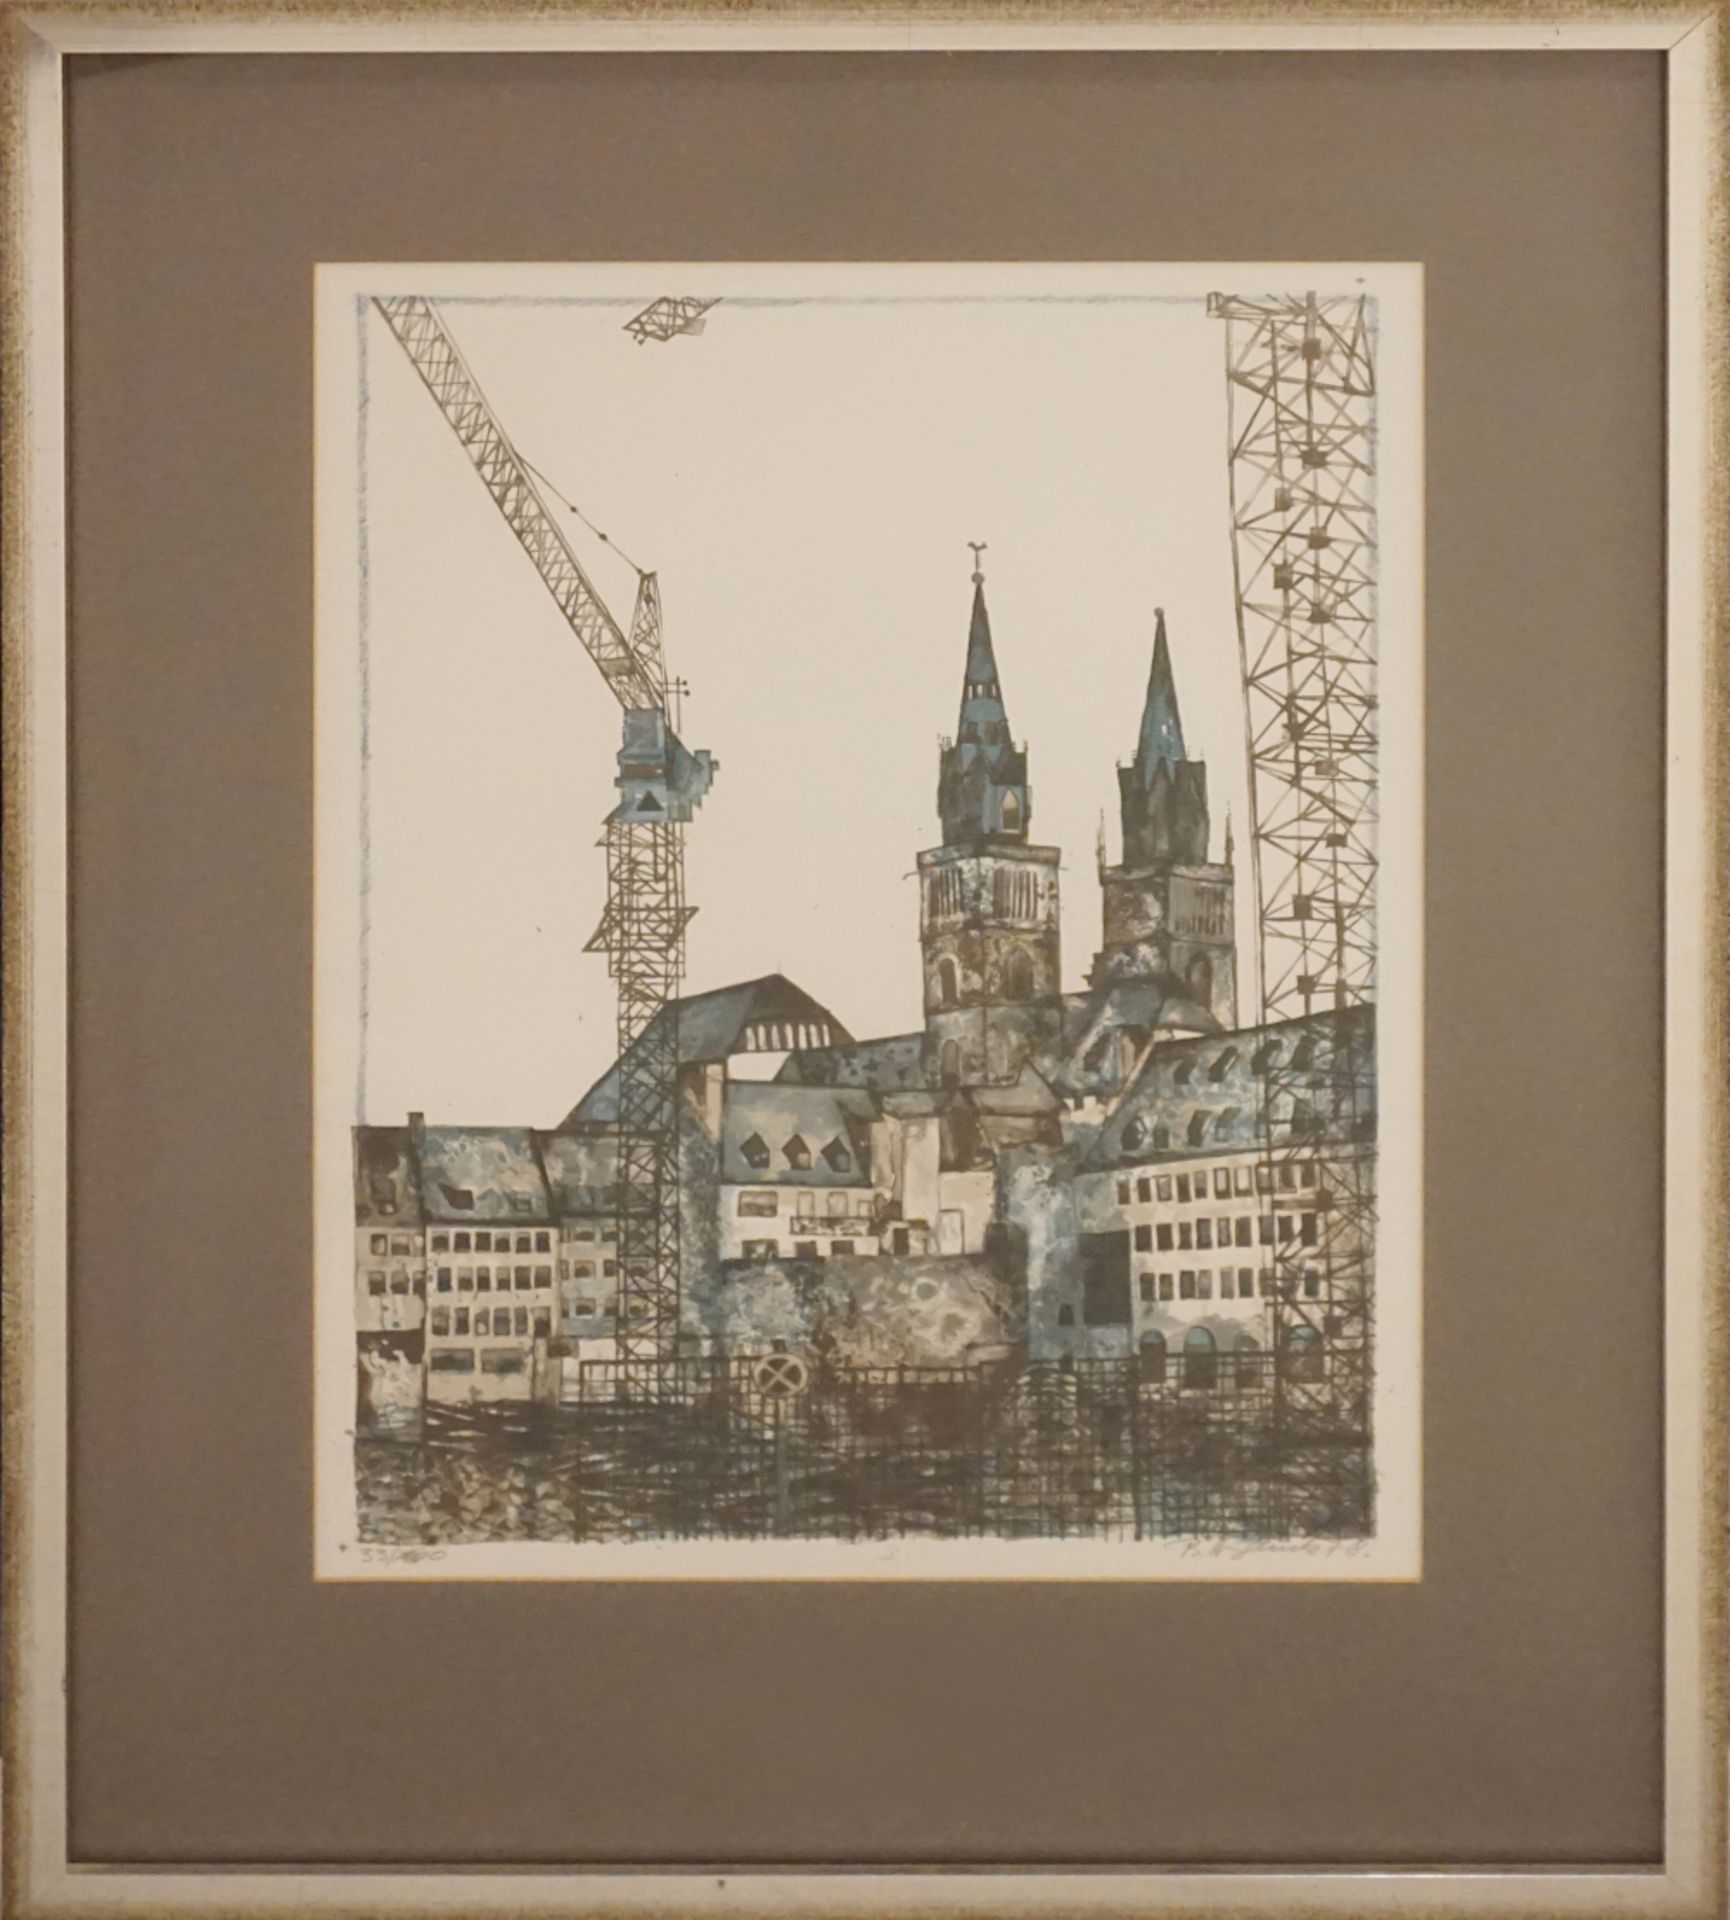 1 Farblithographie "Nürnberger Sebalduskirche unter Baukränen" R.u. bleistiftsign. B. HEYDUCK - Image 2 of 3